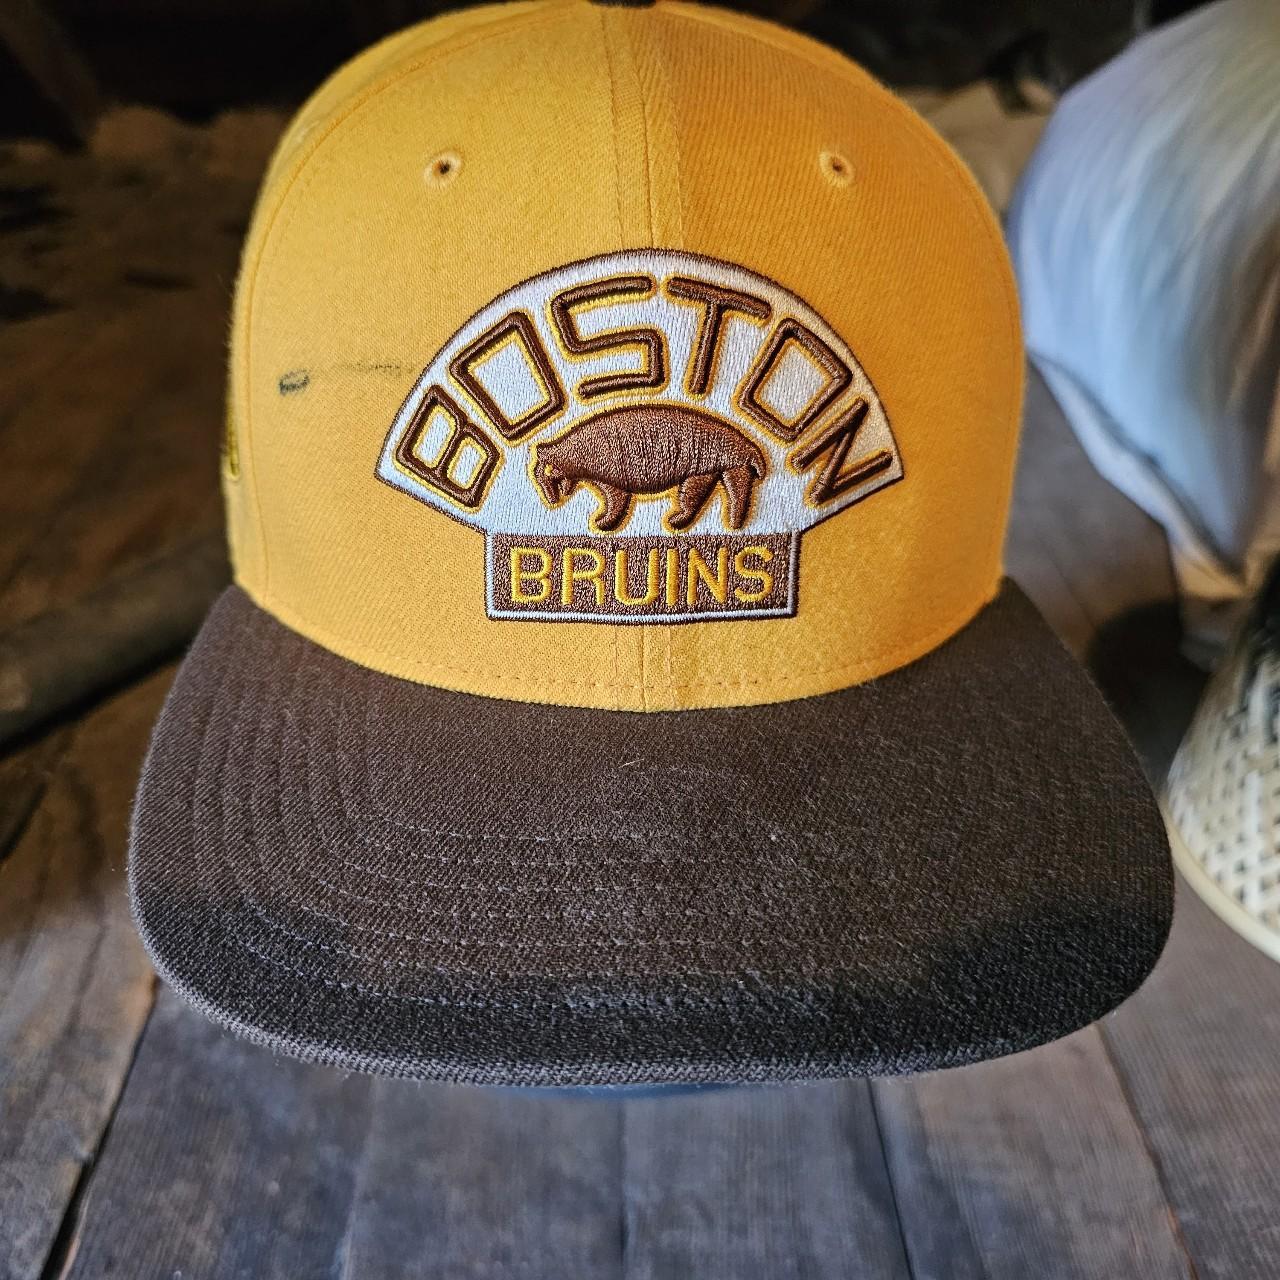 Vintage Boston bruins SnapBack hat 7.5/10 - Depop